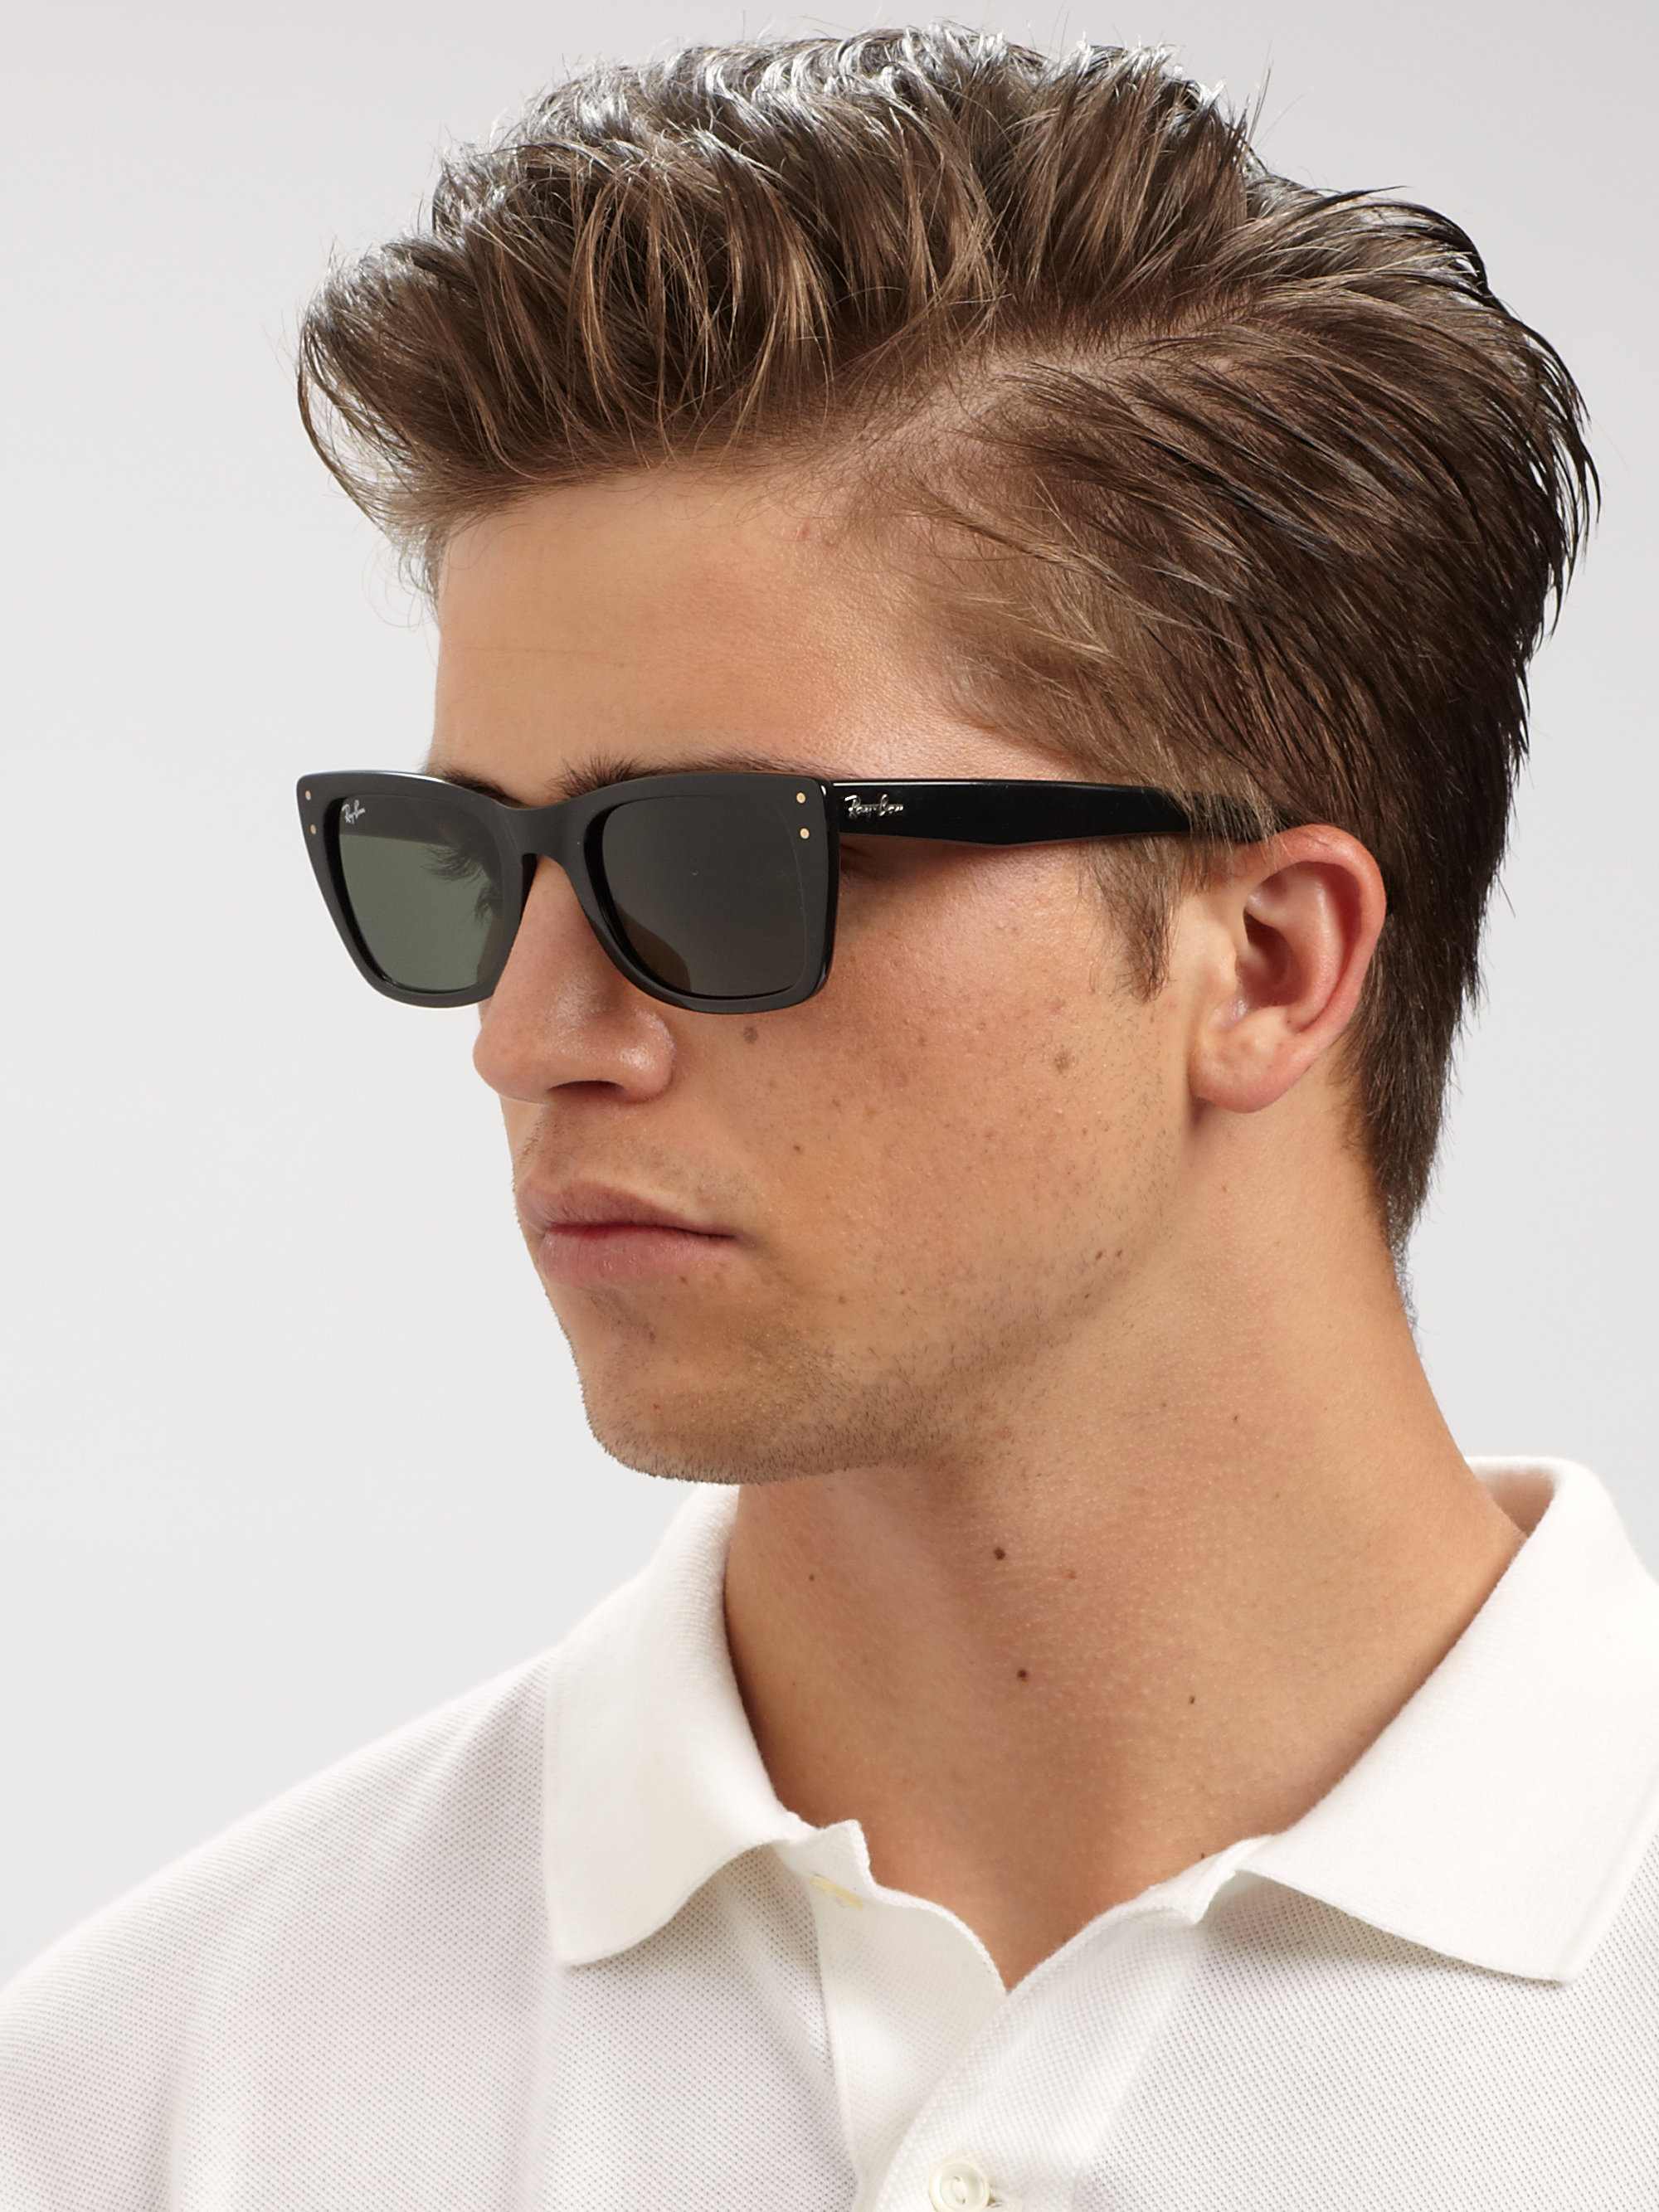 Lyst - Ray-ban Caribbean Sunglasses in Black for Men